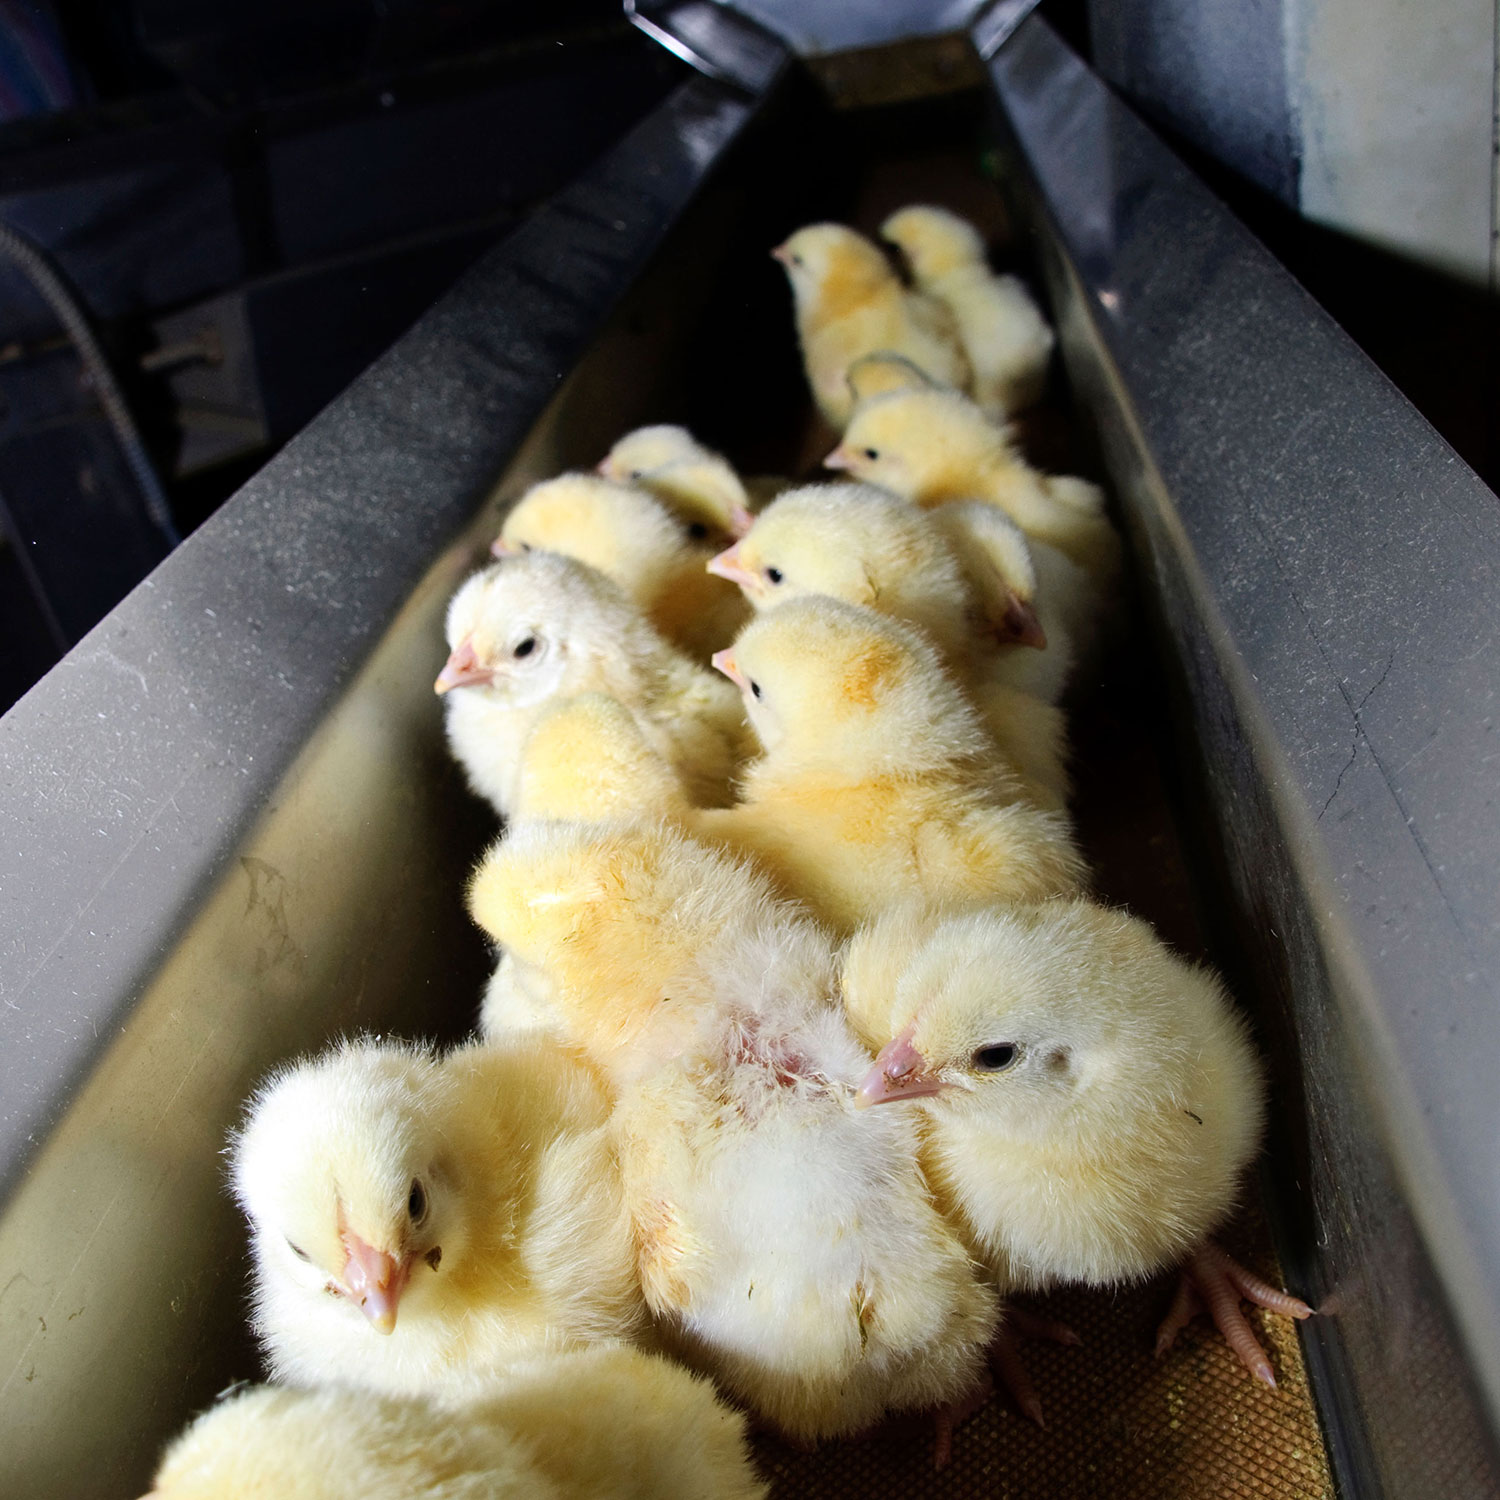 chicks on a conveyor belt